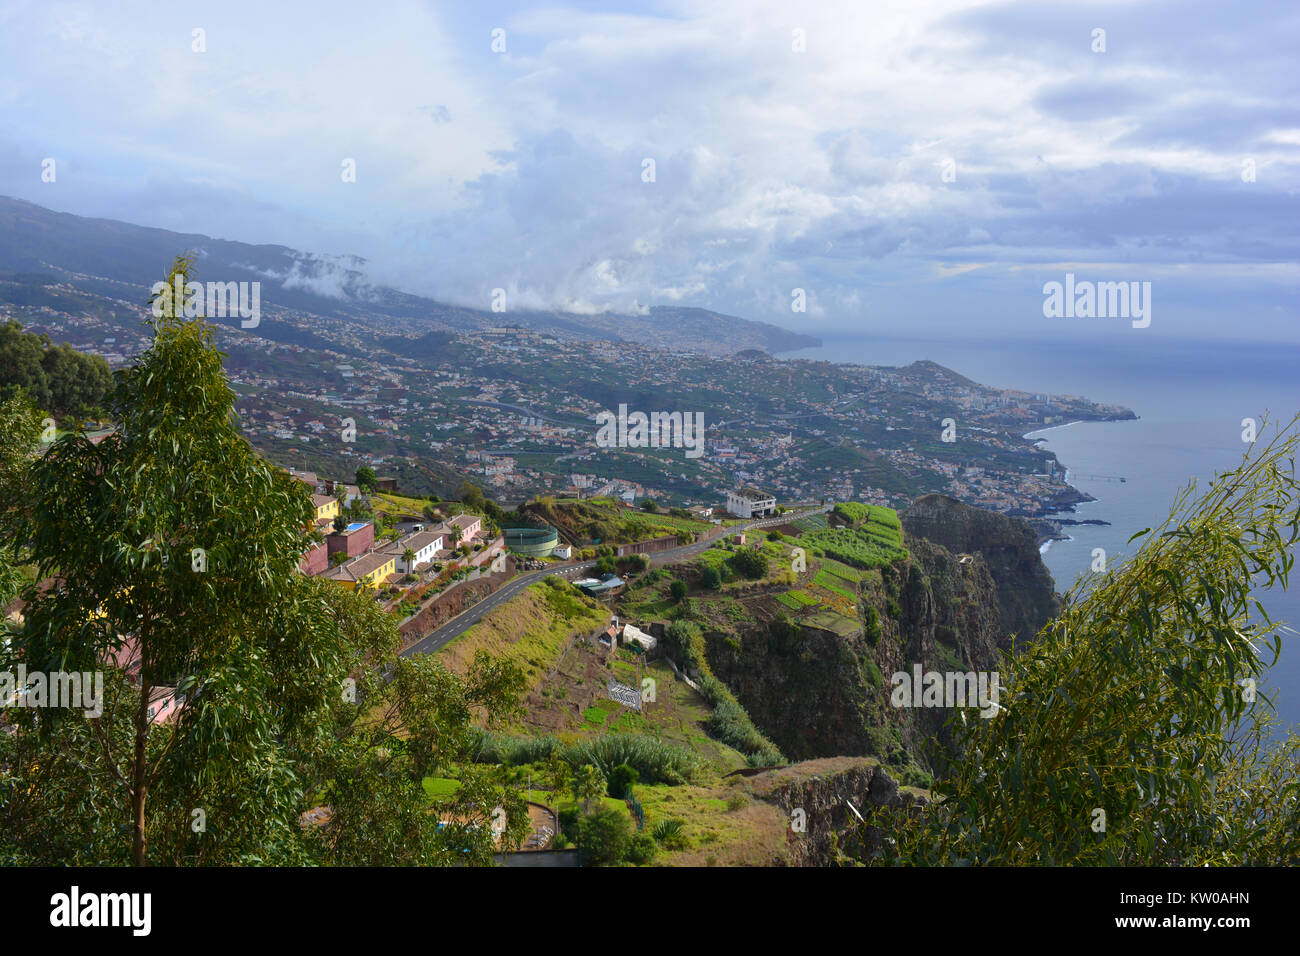 View from the glass floor skywalk at Cabo Girao, Camara de Lobos, Madeira, Portugal Stock Photo